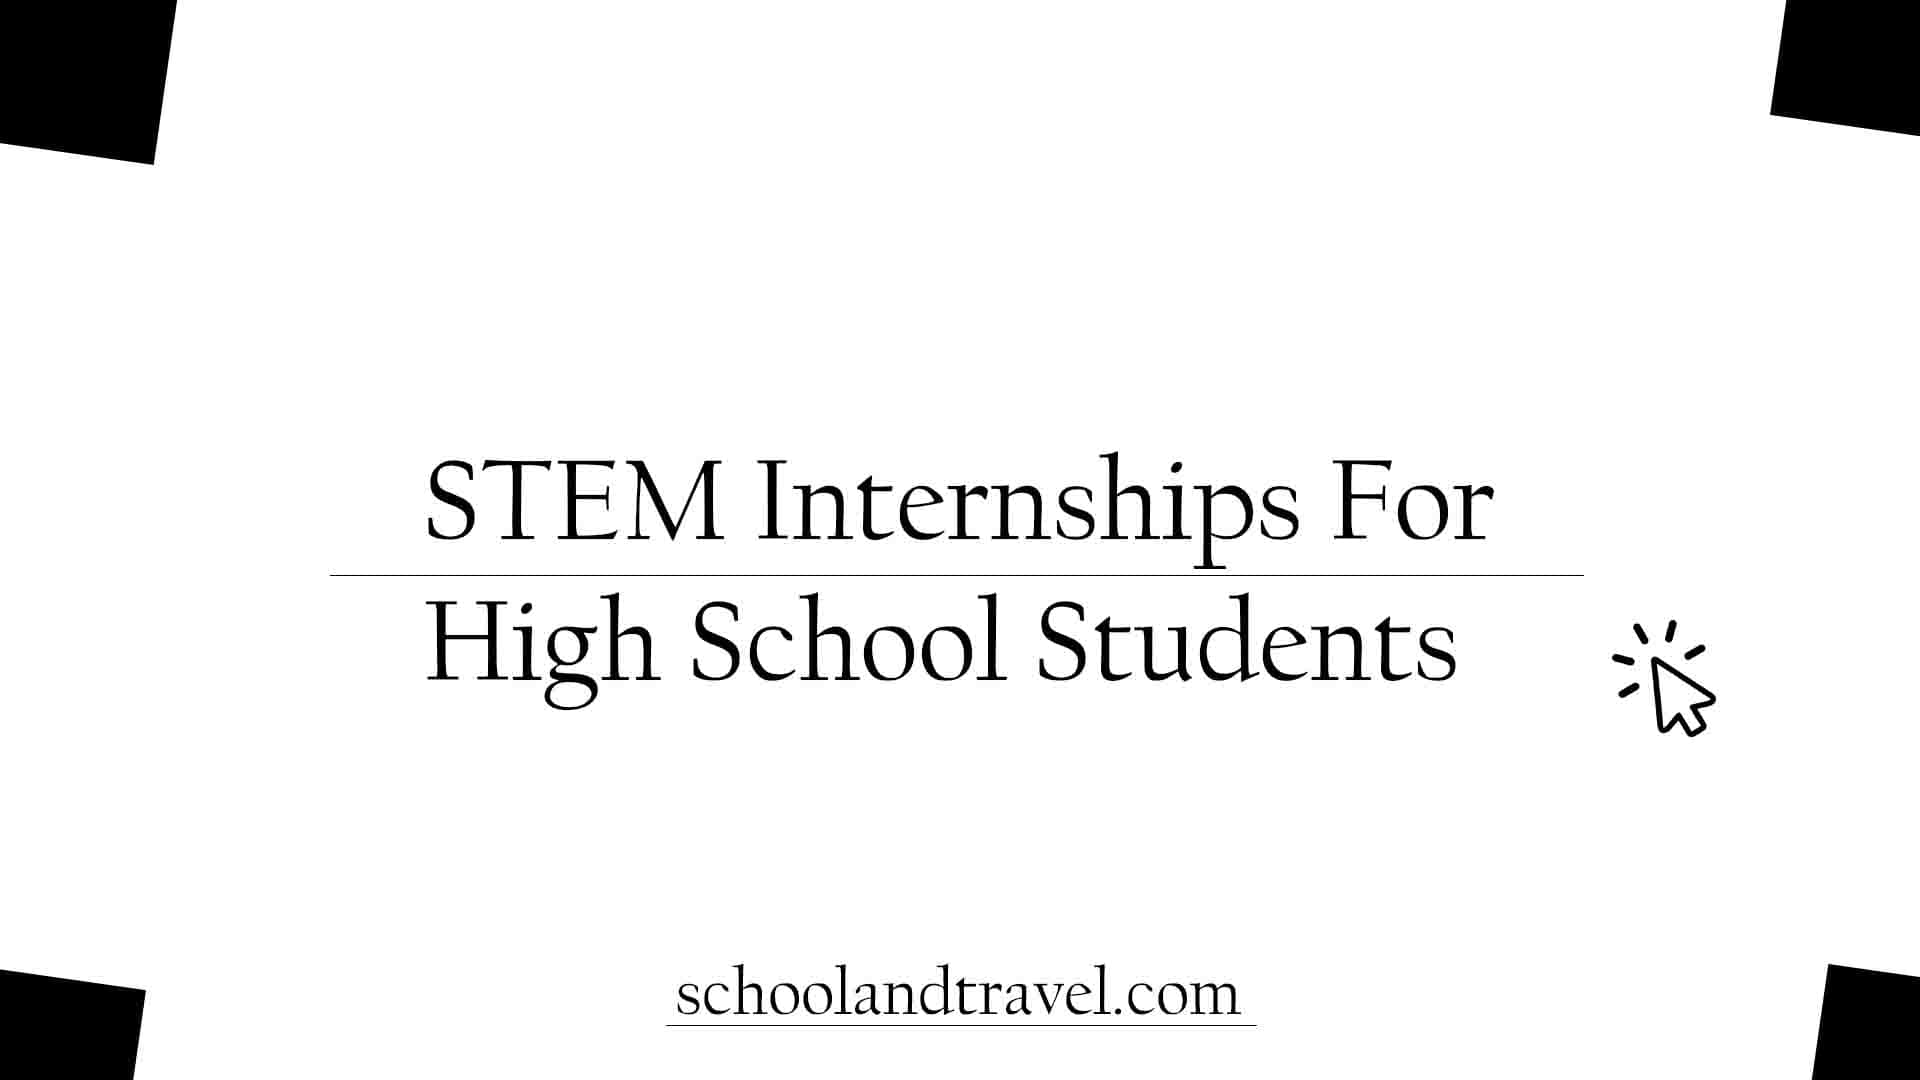 STEM internships for high school students